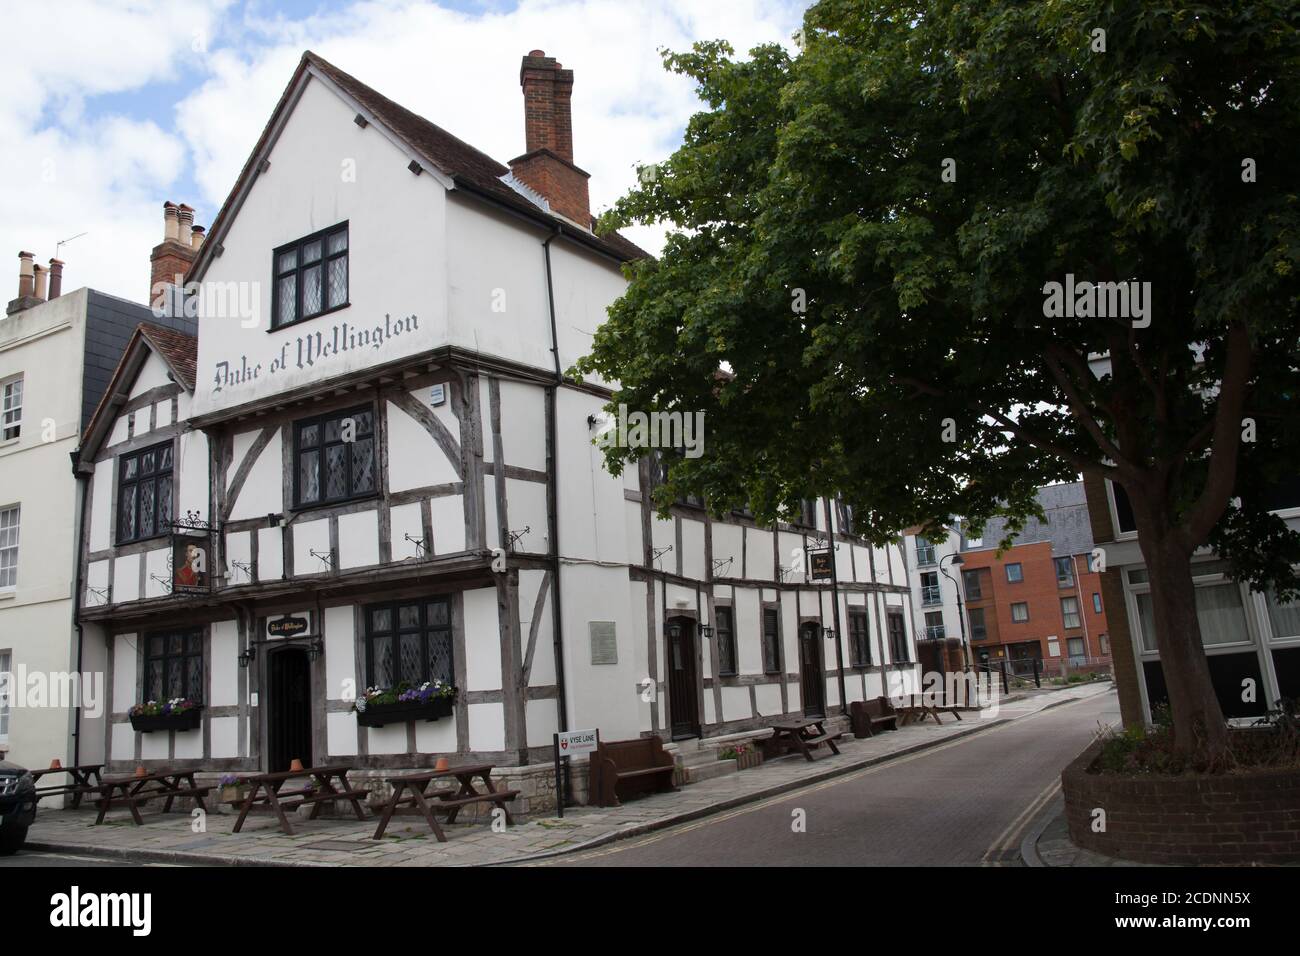 The Duke of Wellington Pub in Southampton, Hampshire in Großbritannien, aufgenommen am 10. Juli 2020 Stockfoto